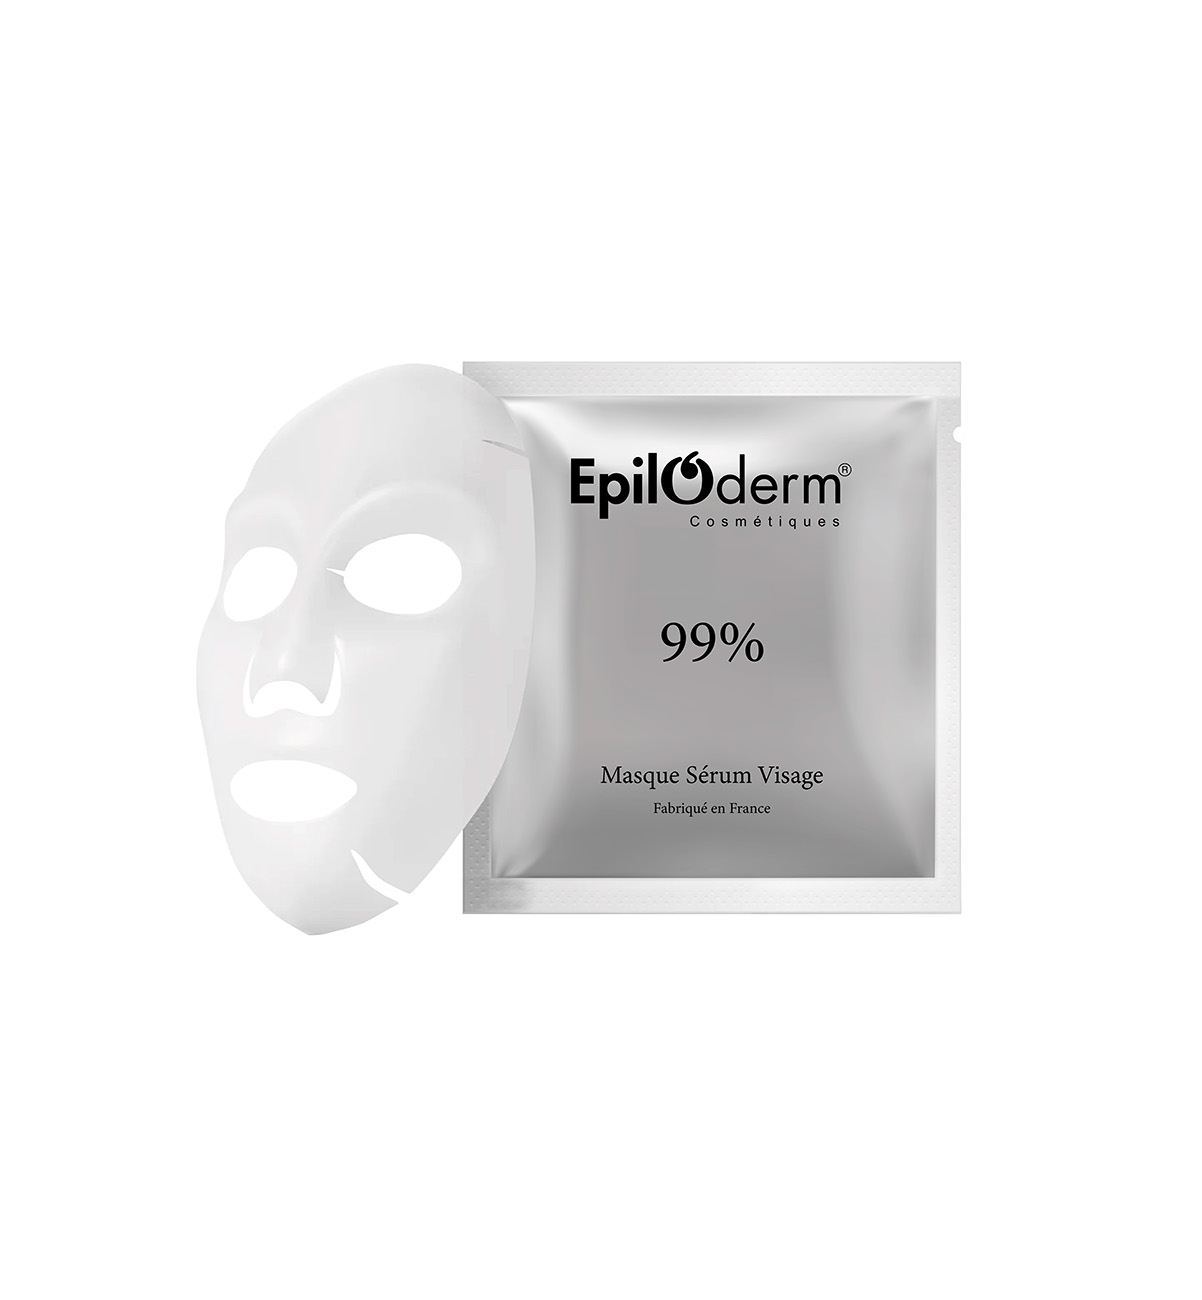 Epiloderm 99% Face Mask